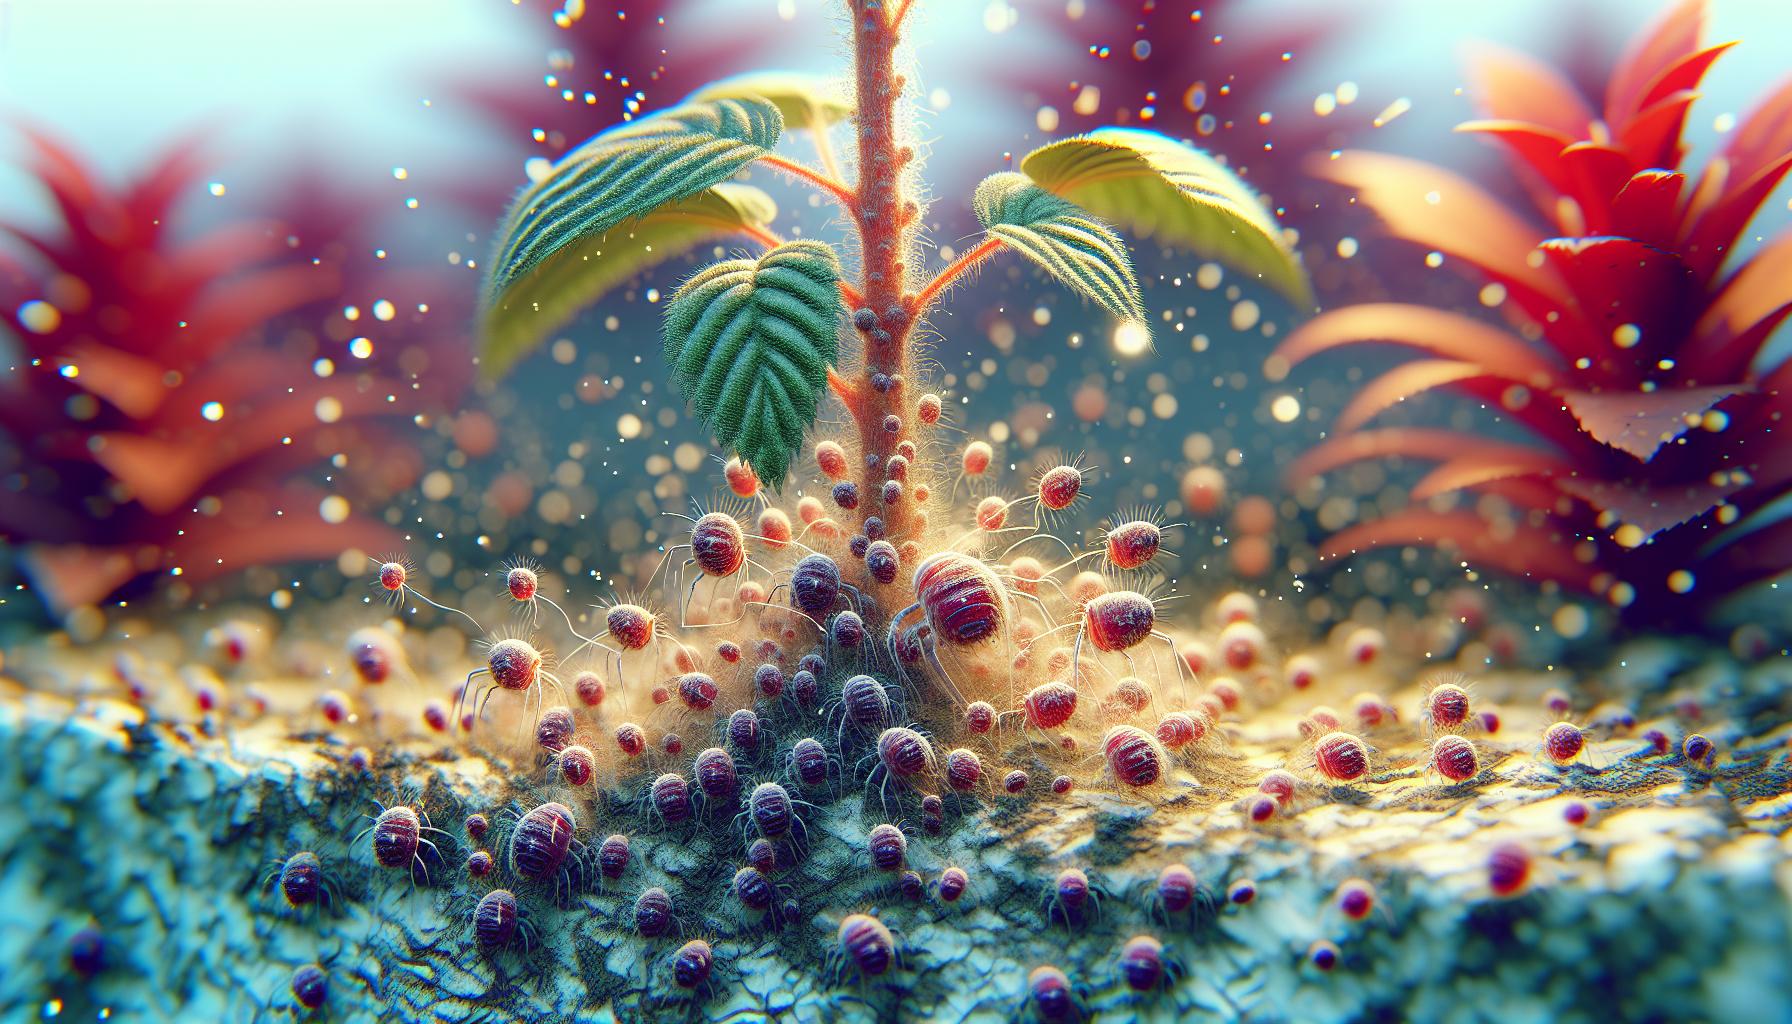 underwater plants bubbles scene